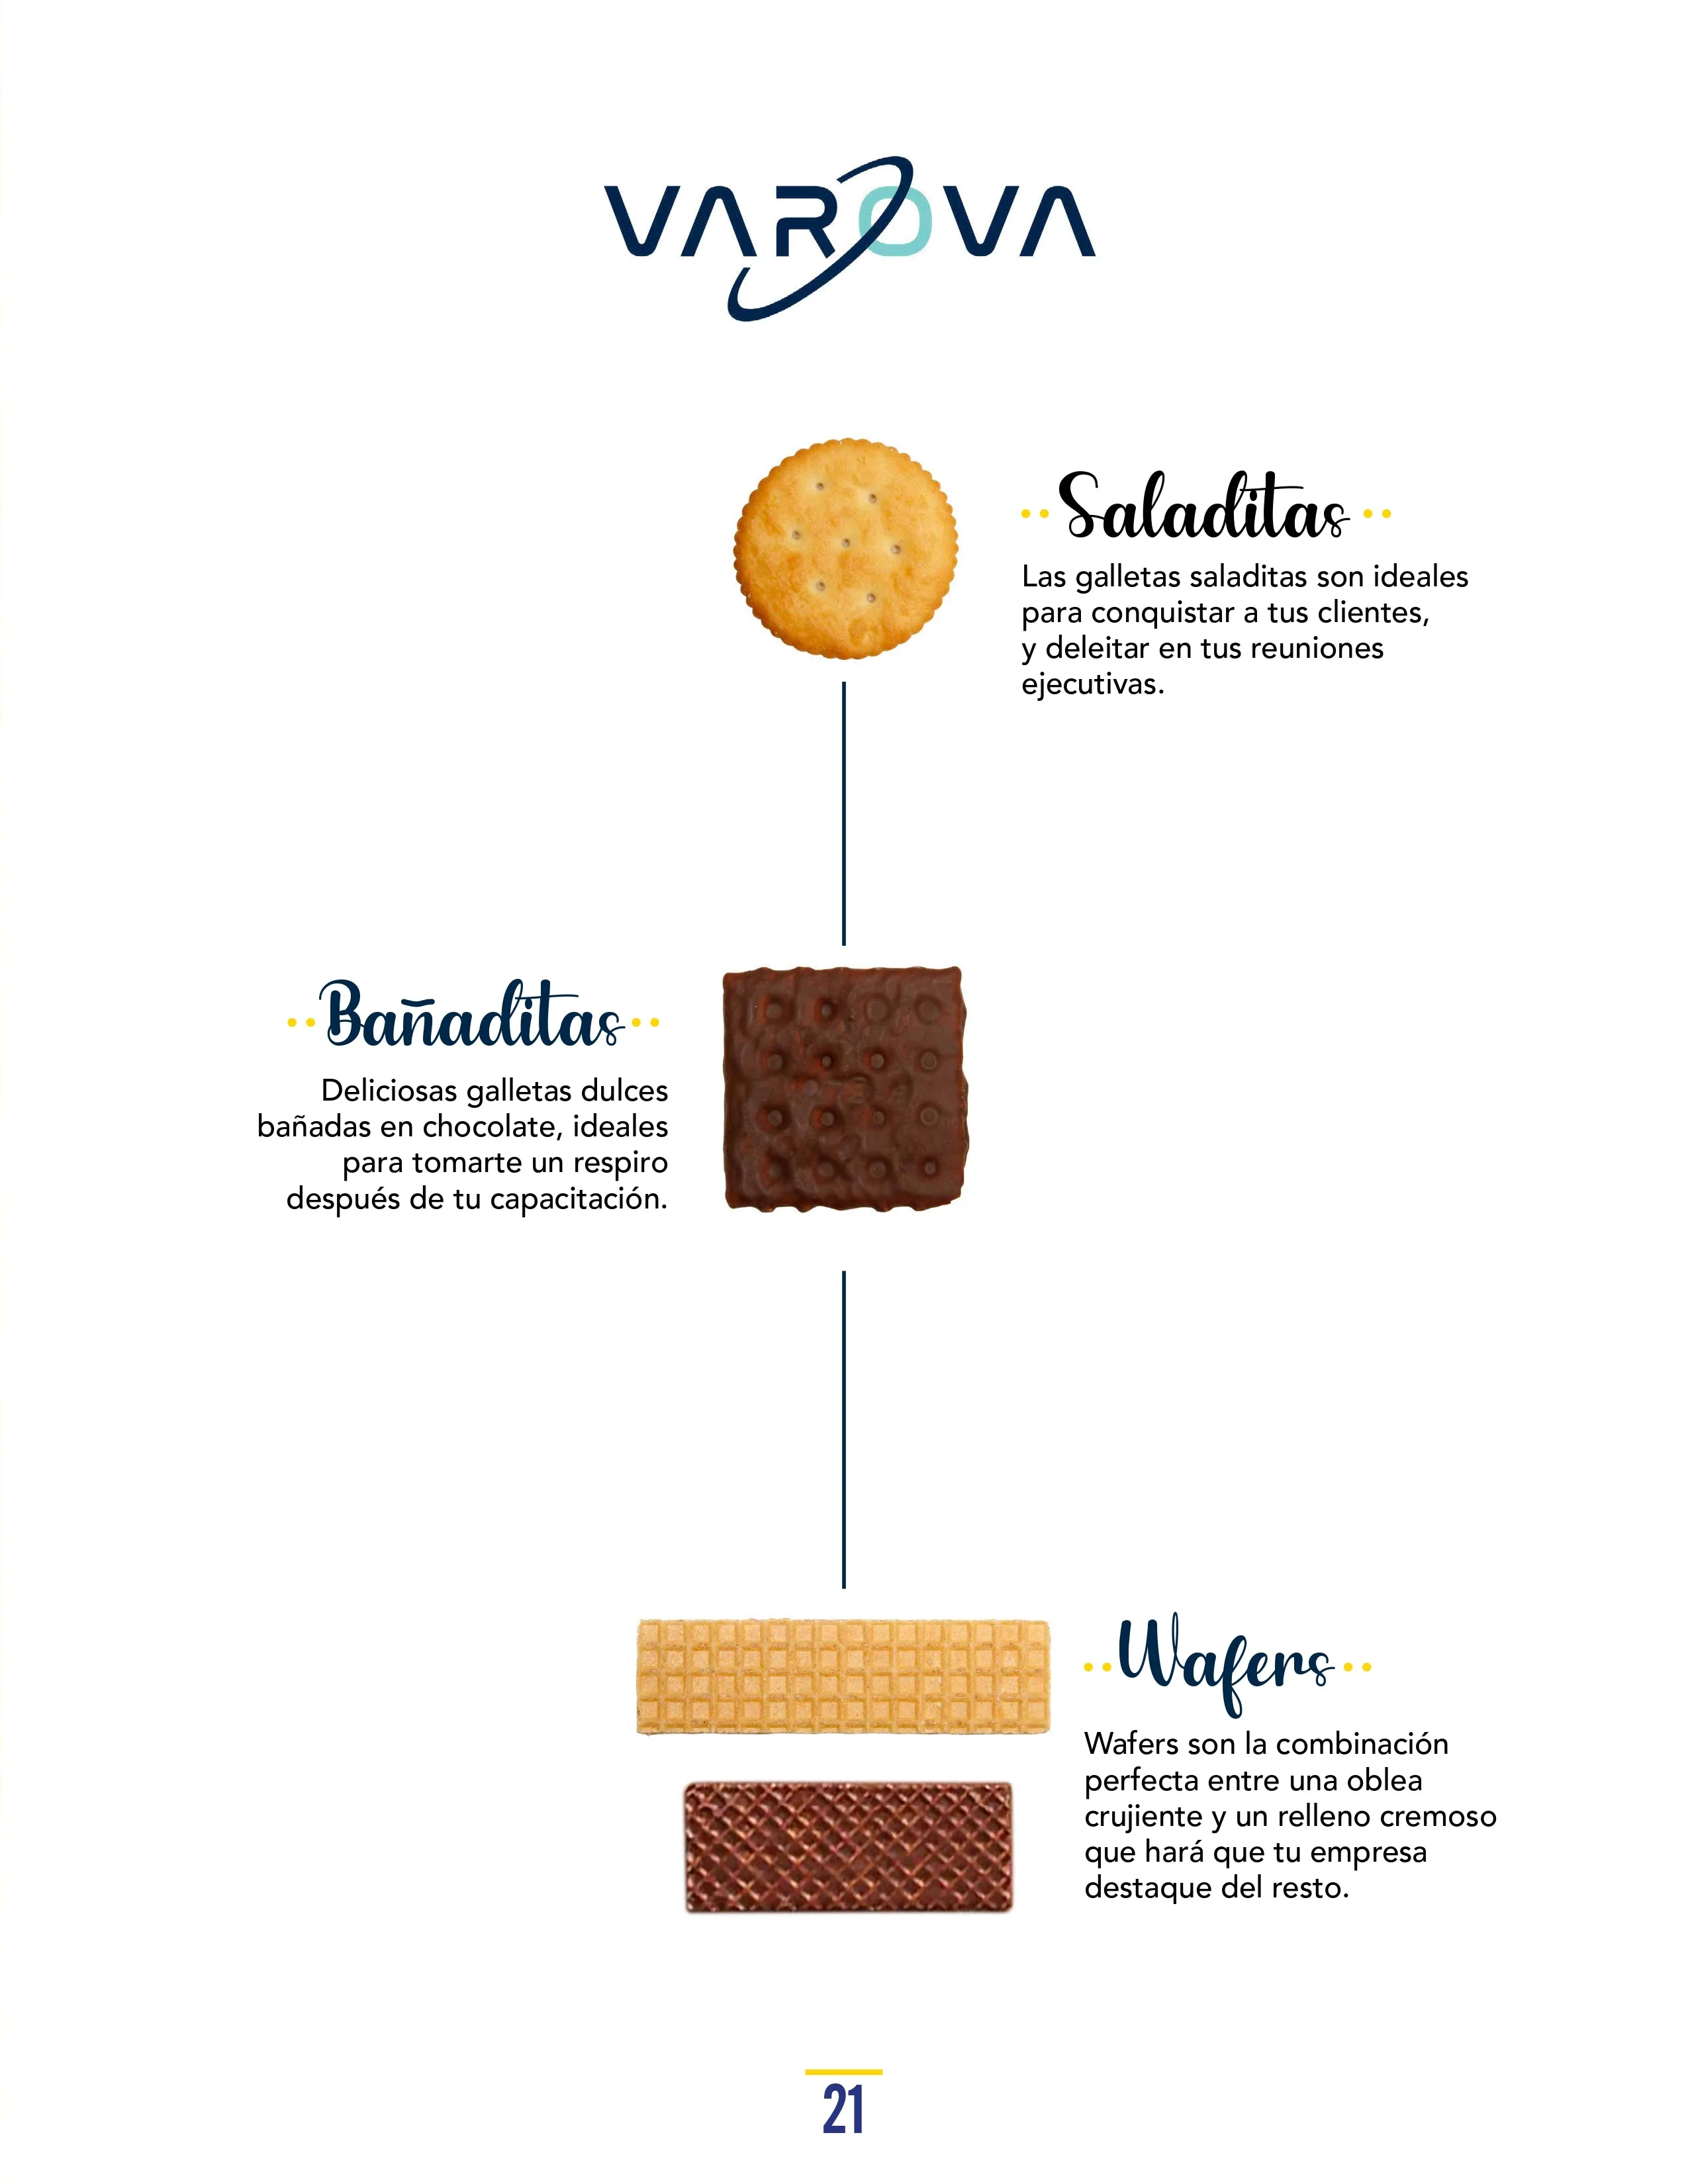 Catálogo de Productos Varova saladitos banaditos wafers personalizados corporativos